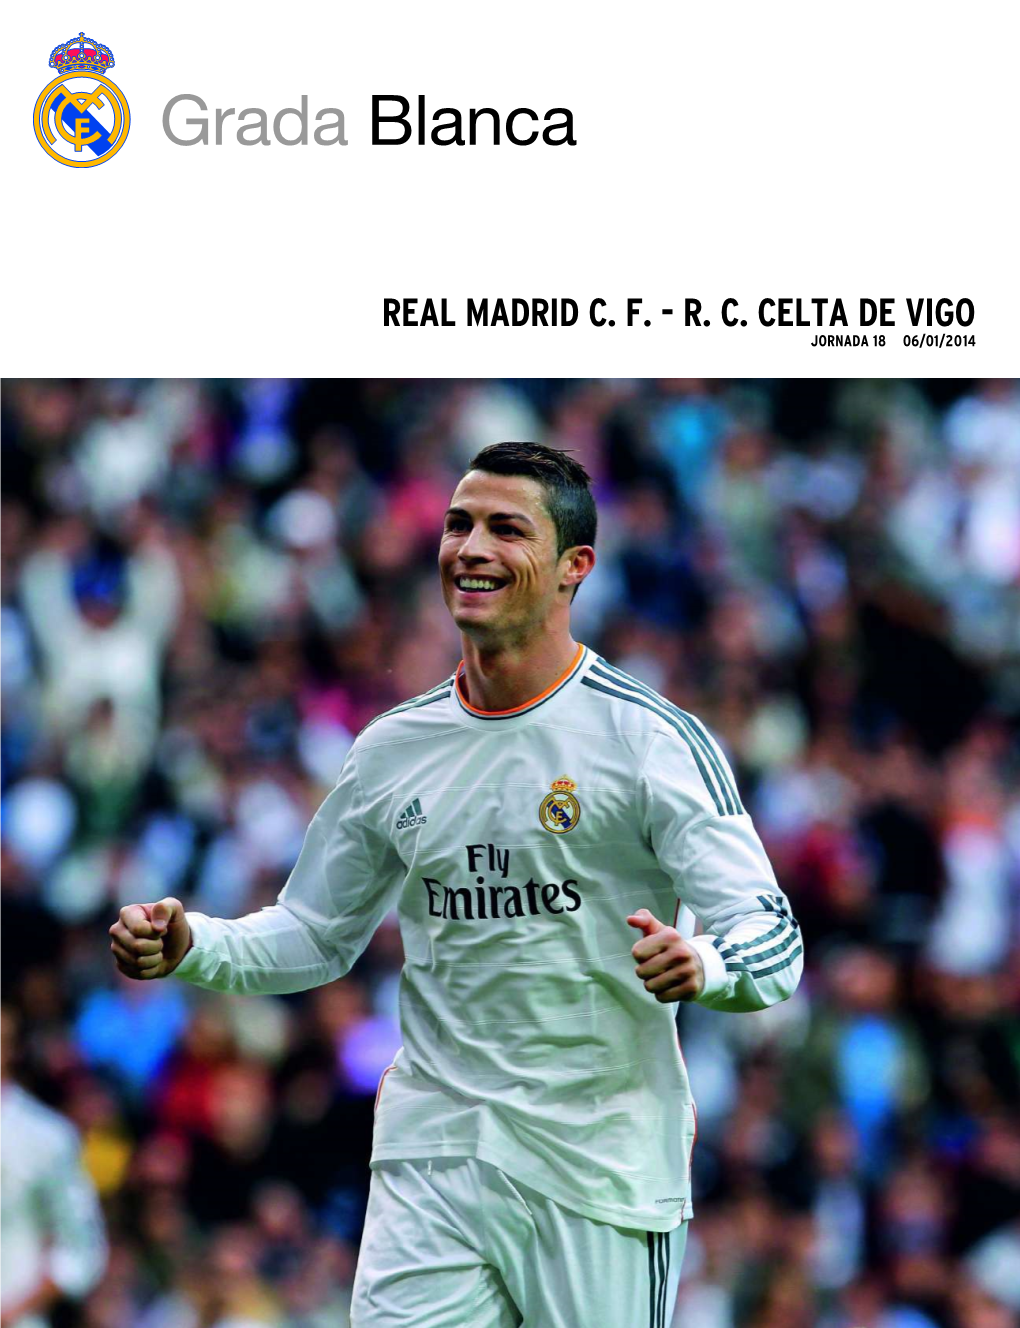 Real Madrid C. F. - R